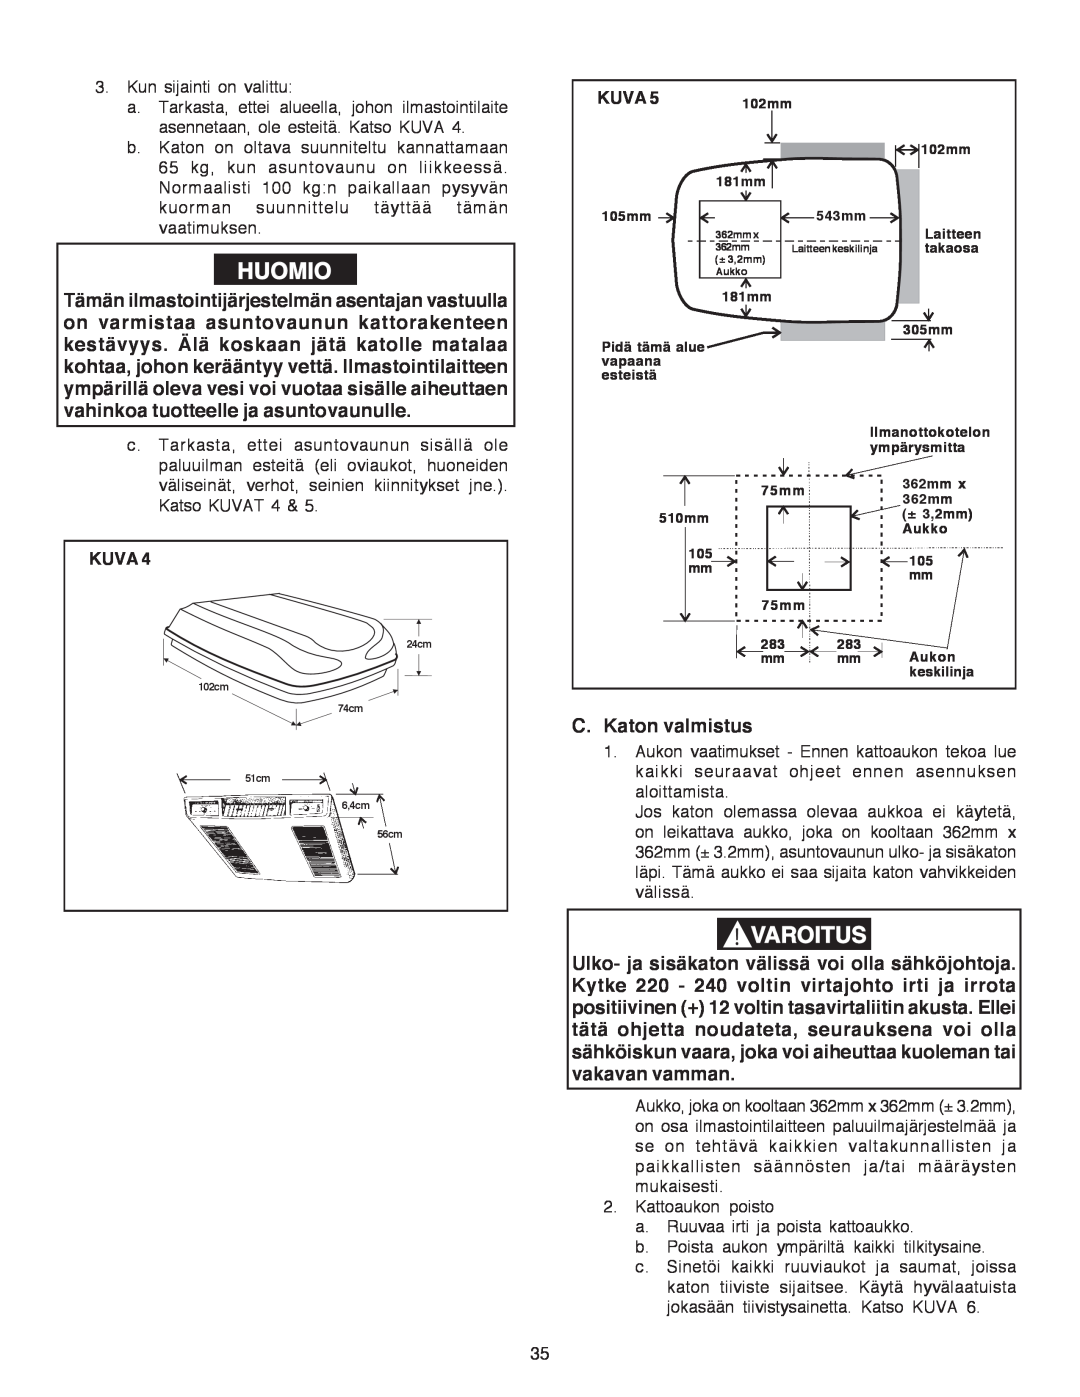 Dometic B3200 manual Huomio, Varoitus, C. Katon valmistus, Kuva 